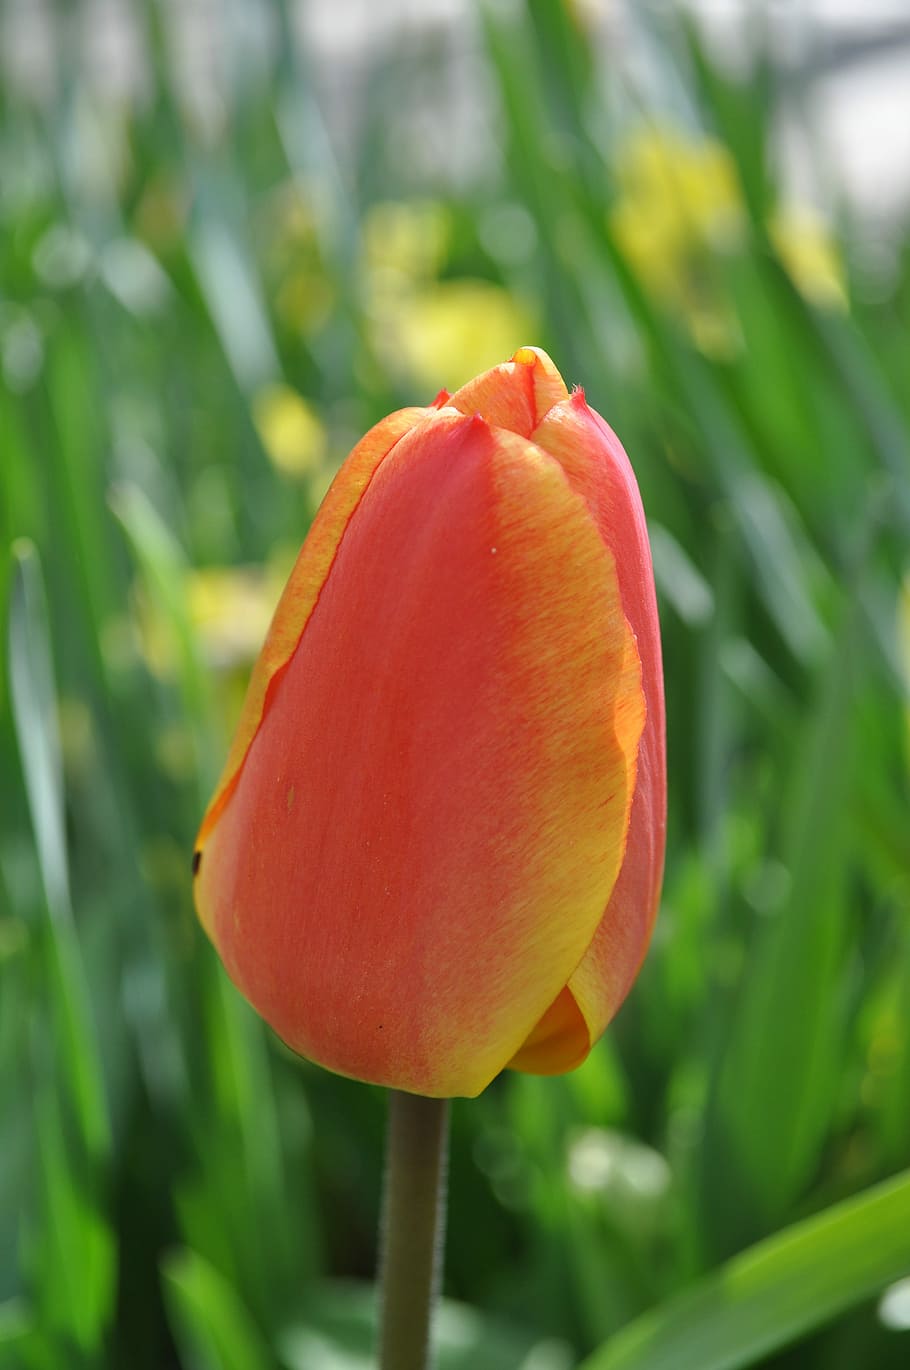 Tulips, Tulip, Flower, flowers, perennial, holland, spring, nature, spring blossom, bulb flower